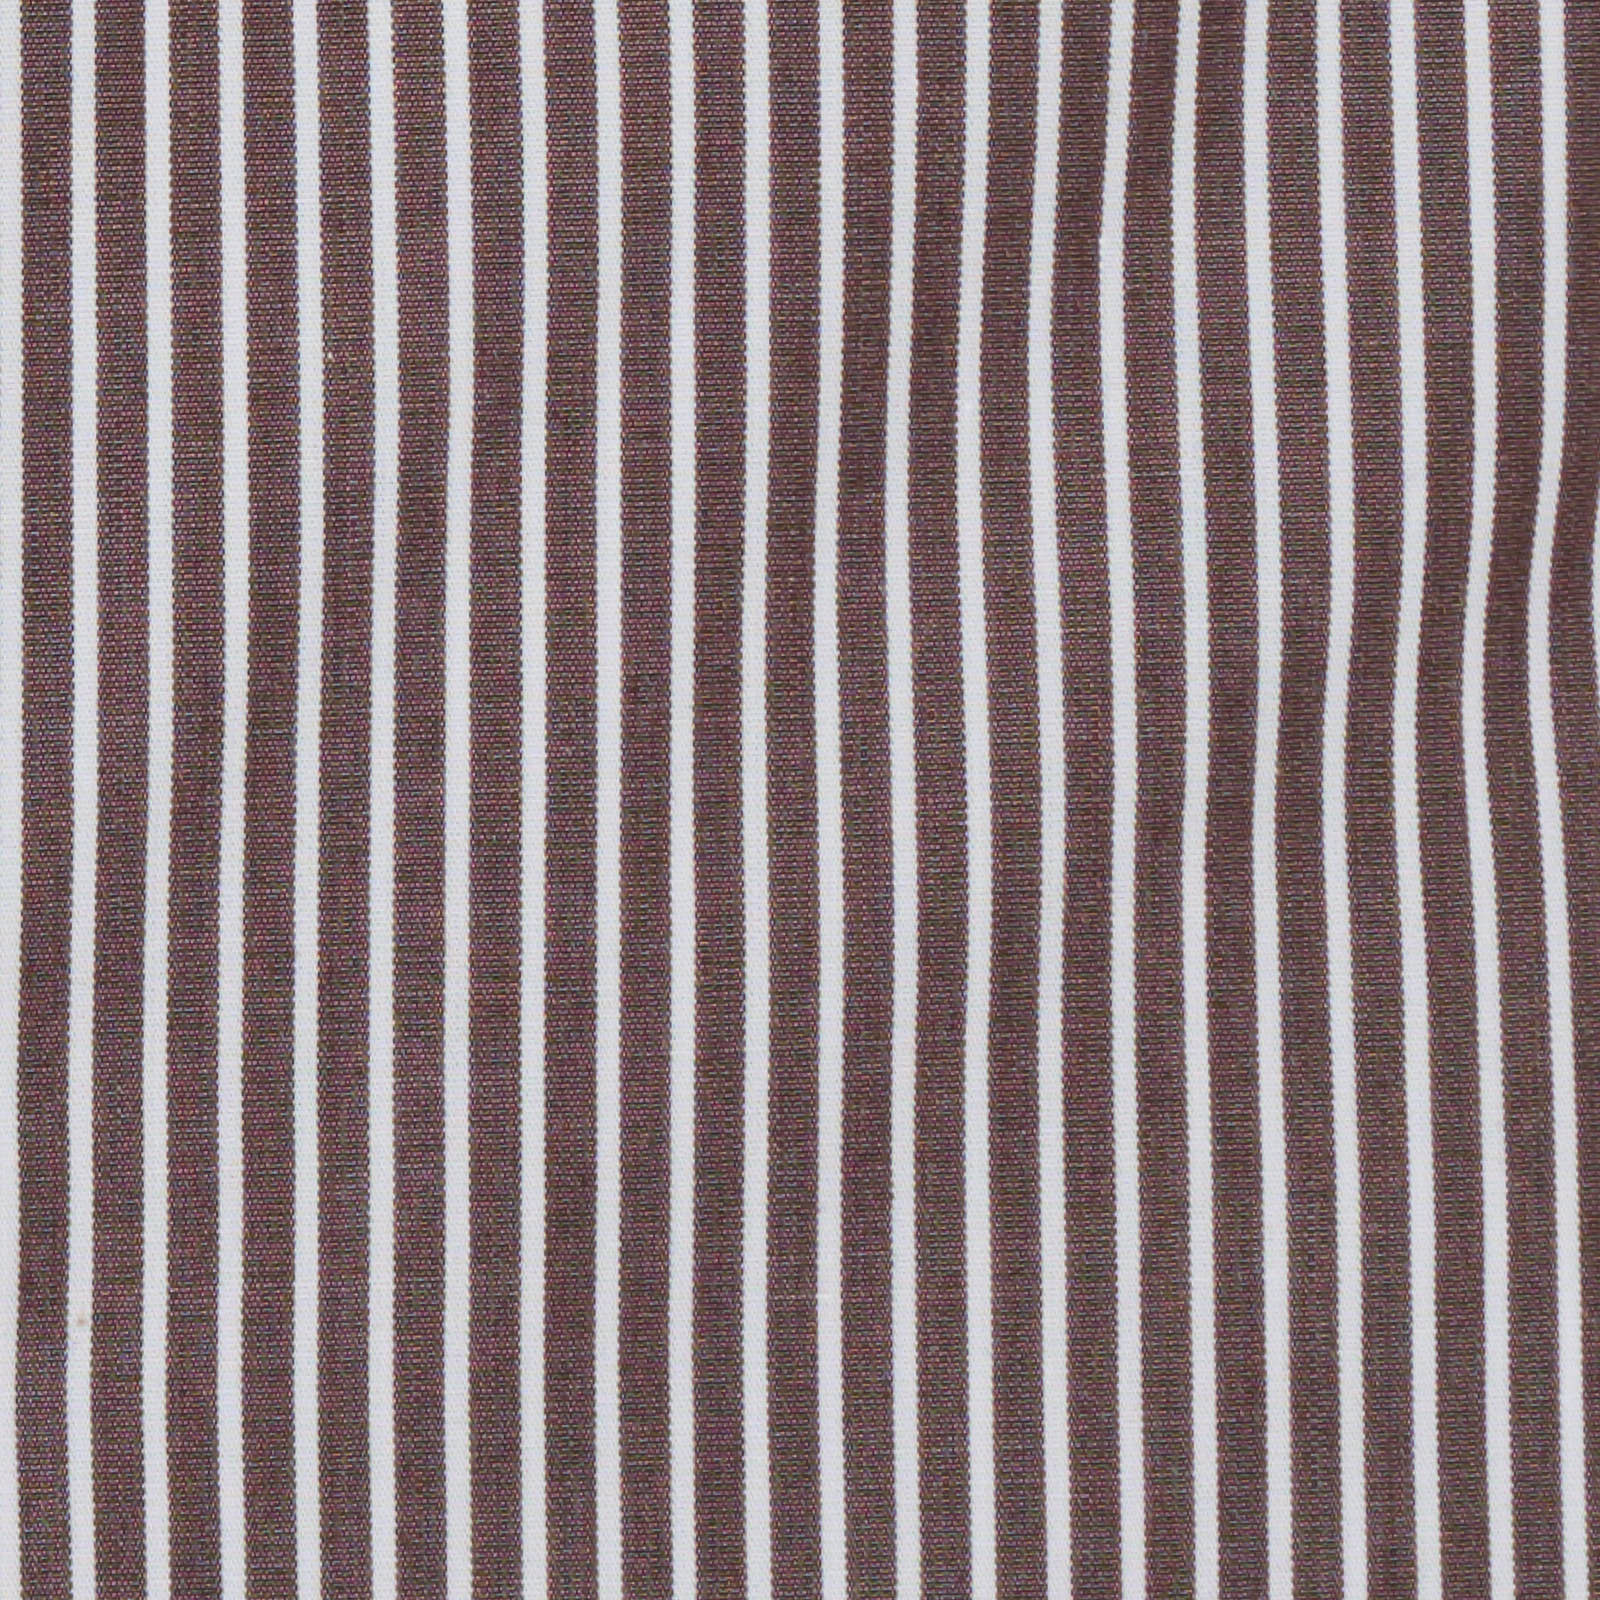 VANNUCCI Milano Dark Brown Striped Cotton Dress Shirt EU 38 NEW US 15